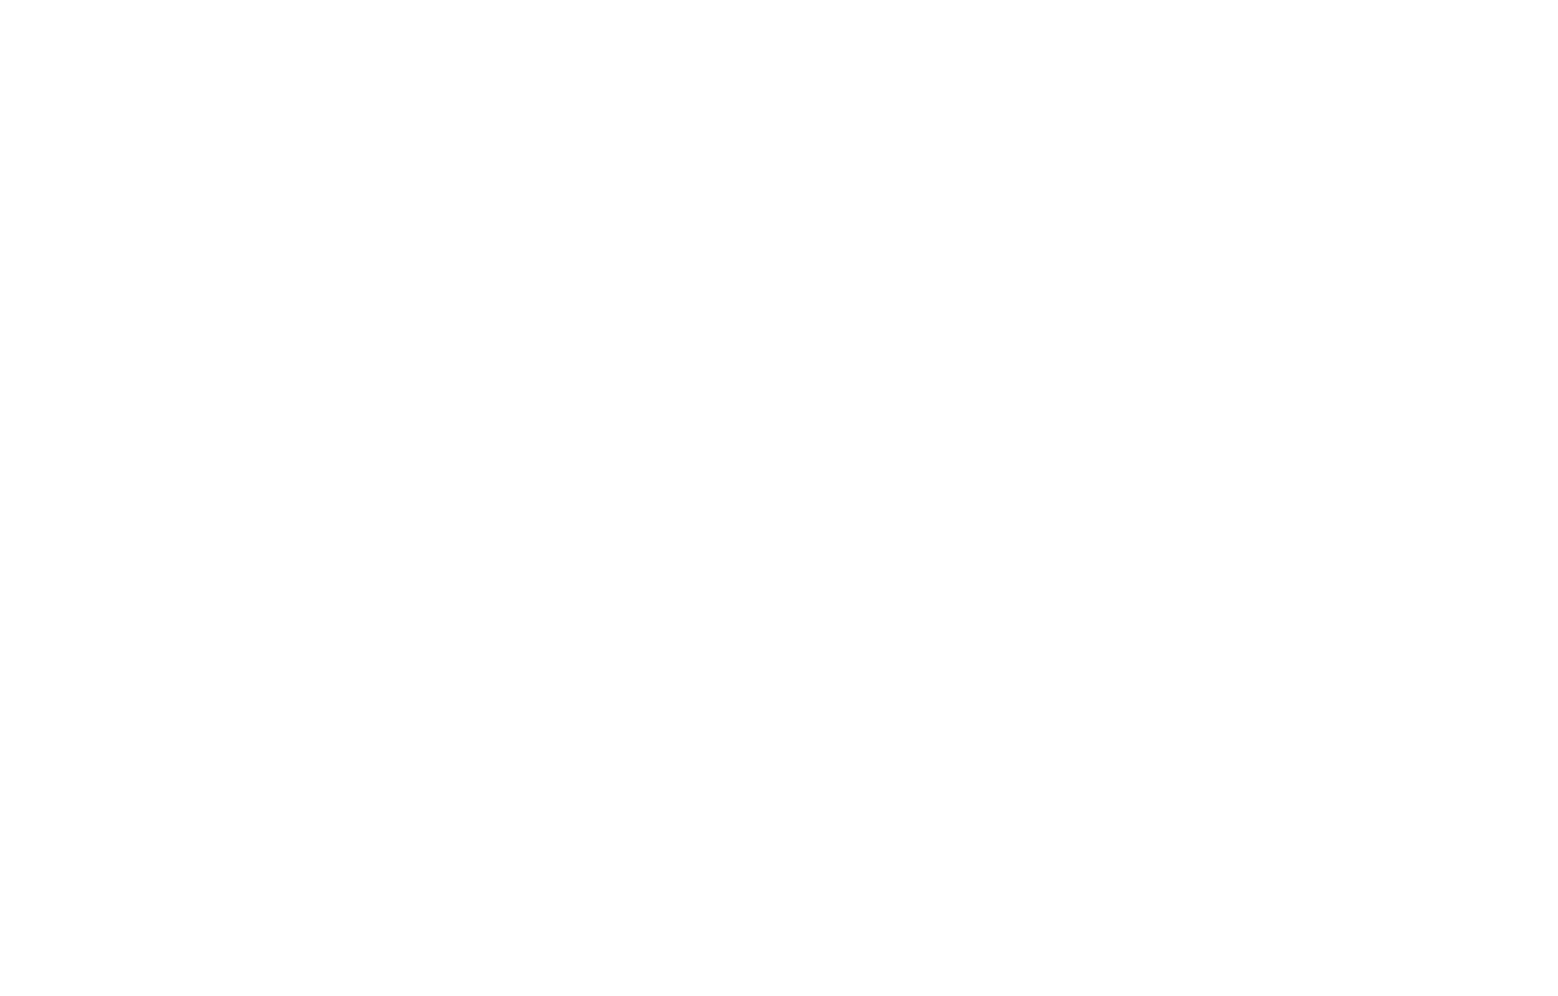 China Yongda Automobiles Services logo pour fonds sombres (PNG transparent)